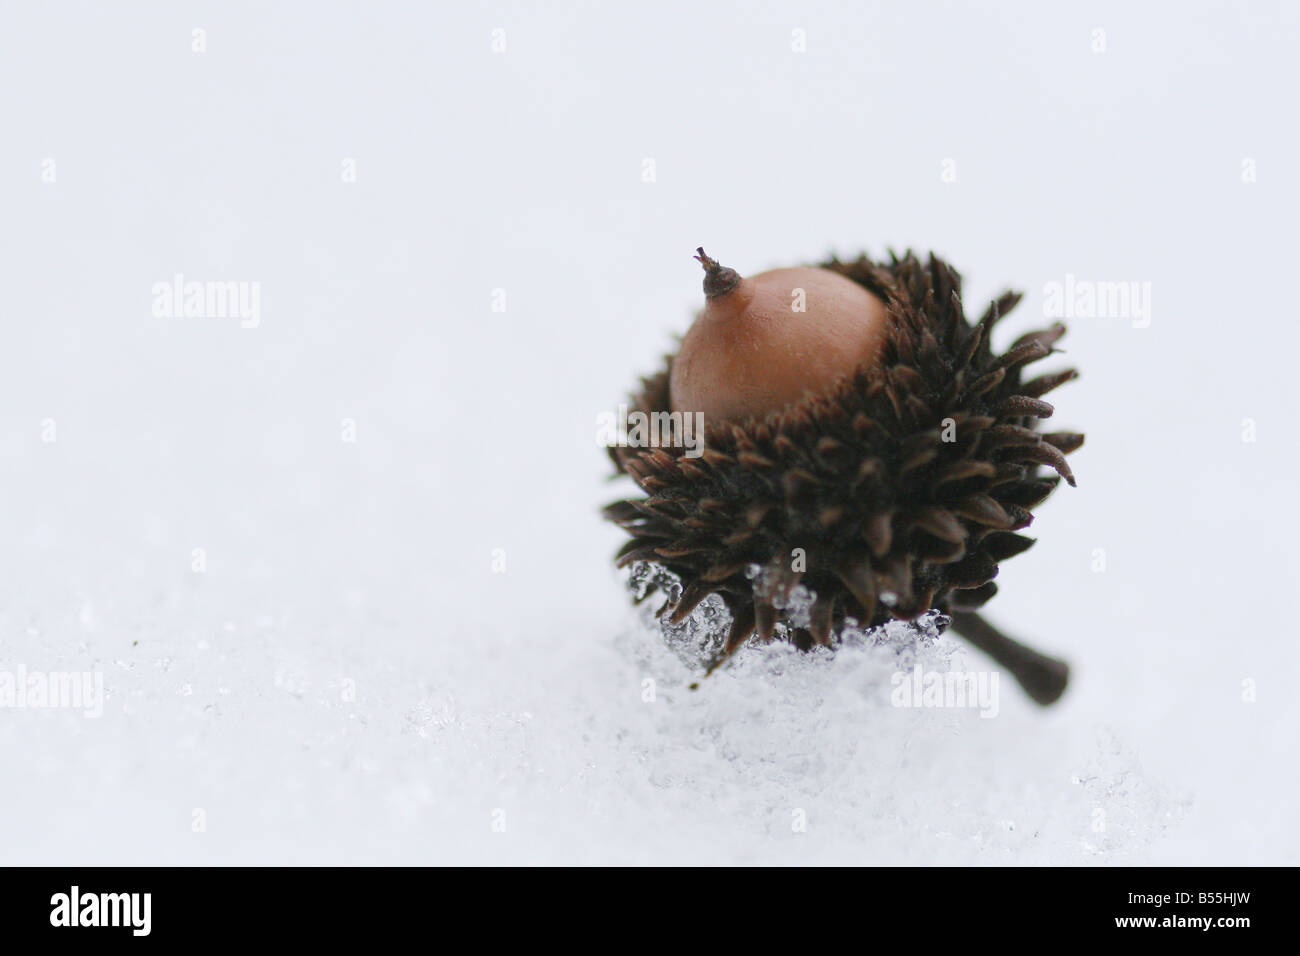 Oak acorn su sfondo bianco Foto Stock